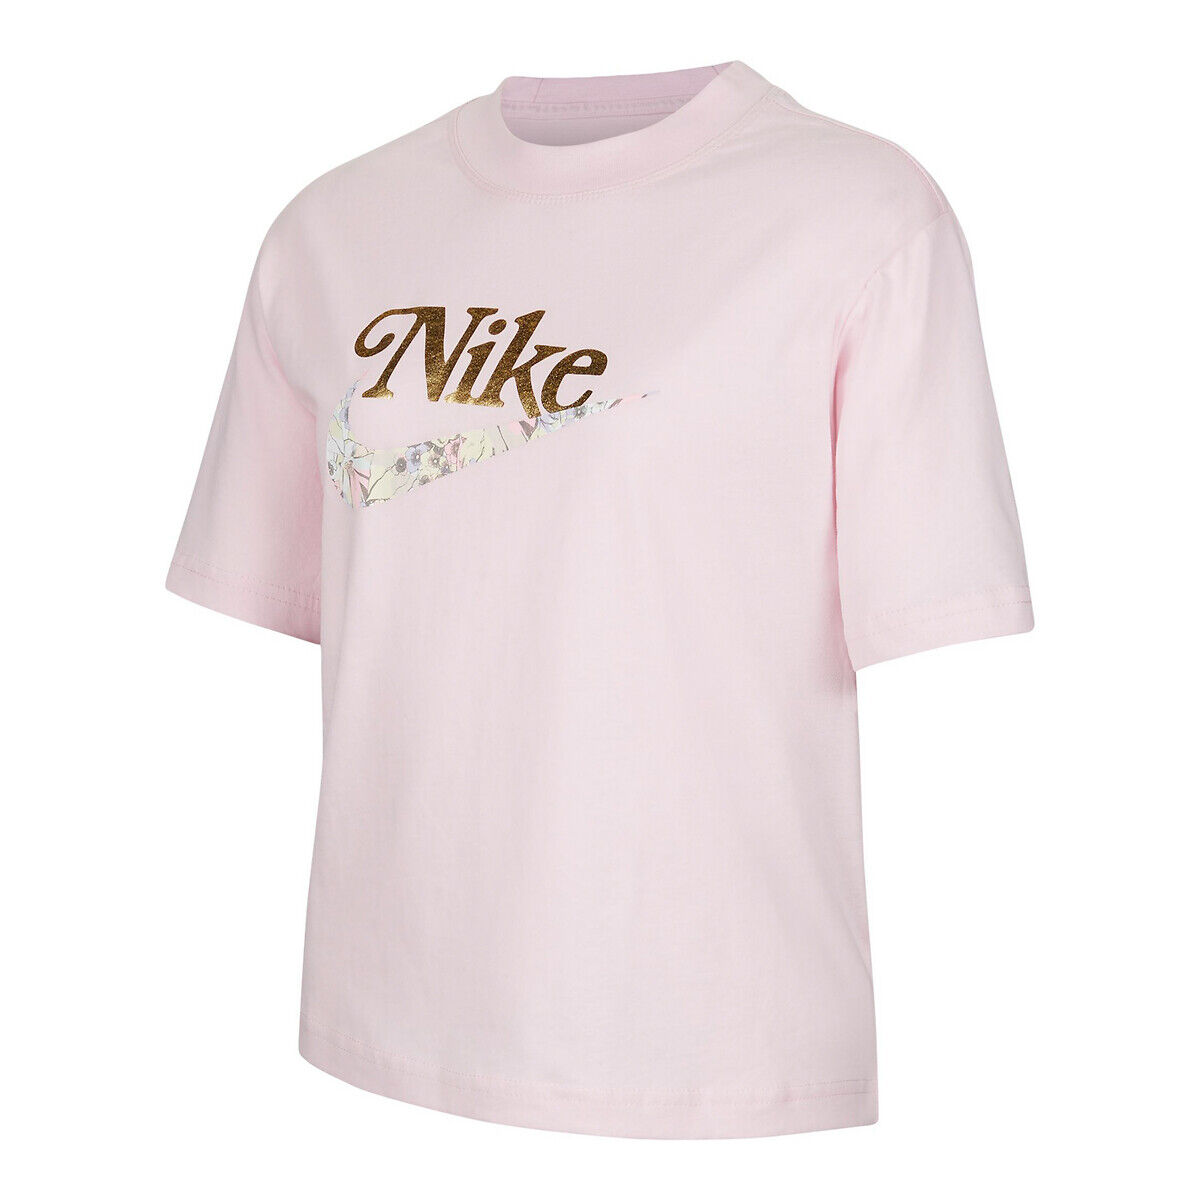 NIKE T-shirt manches courtes XS-XL